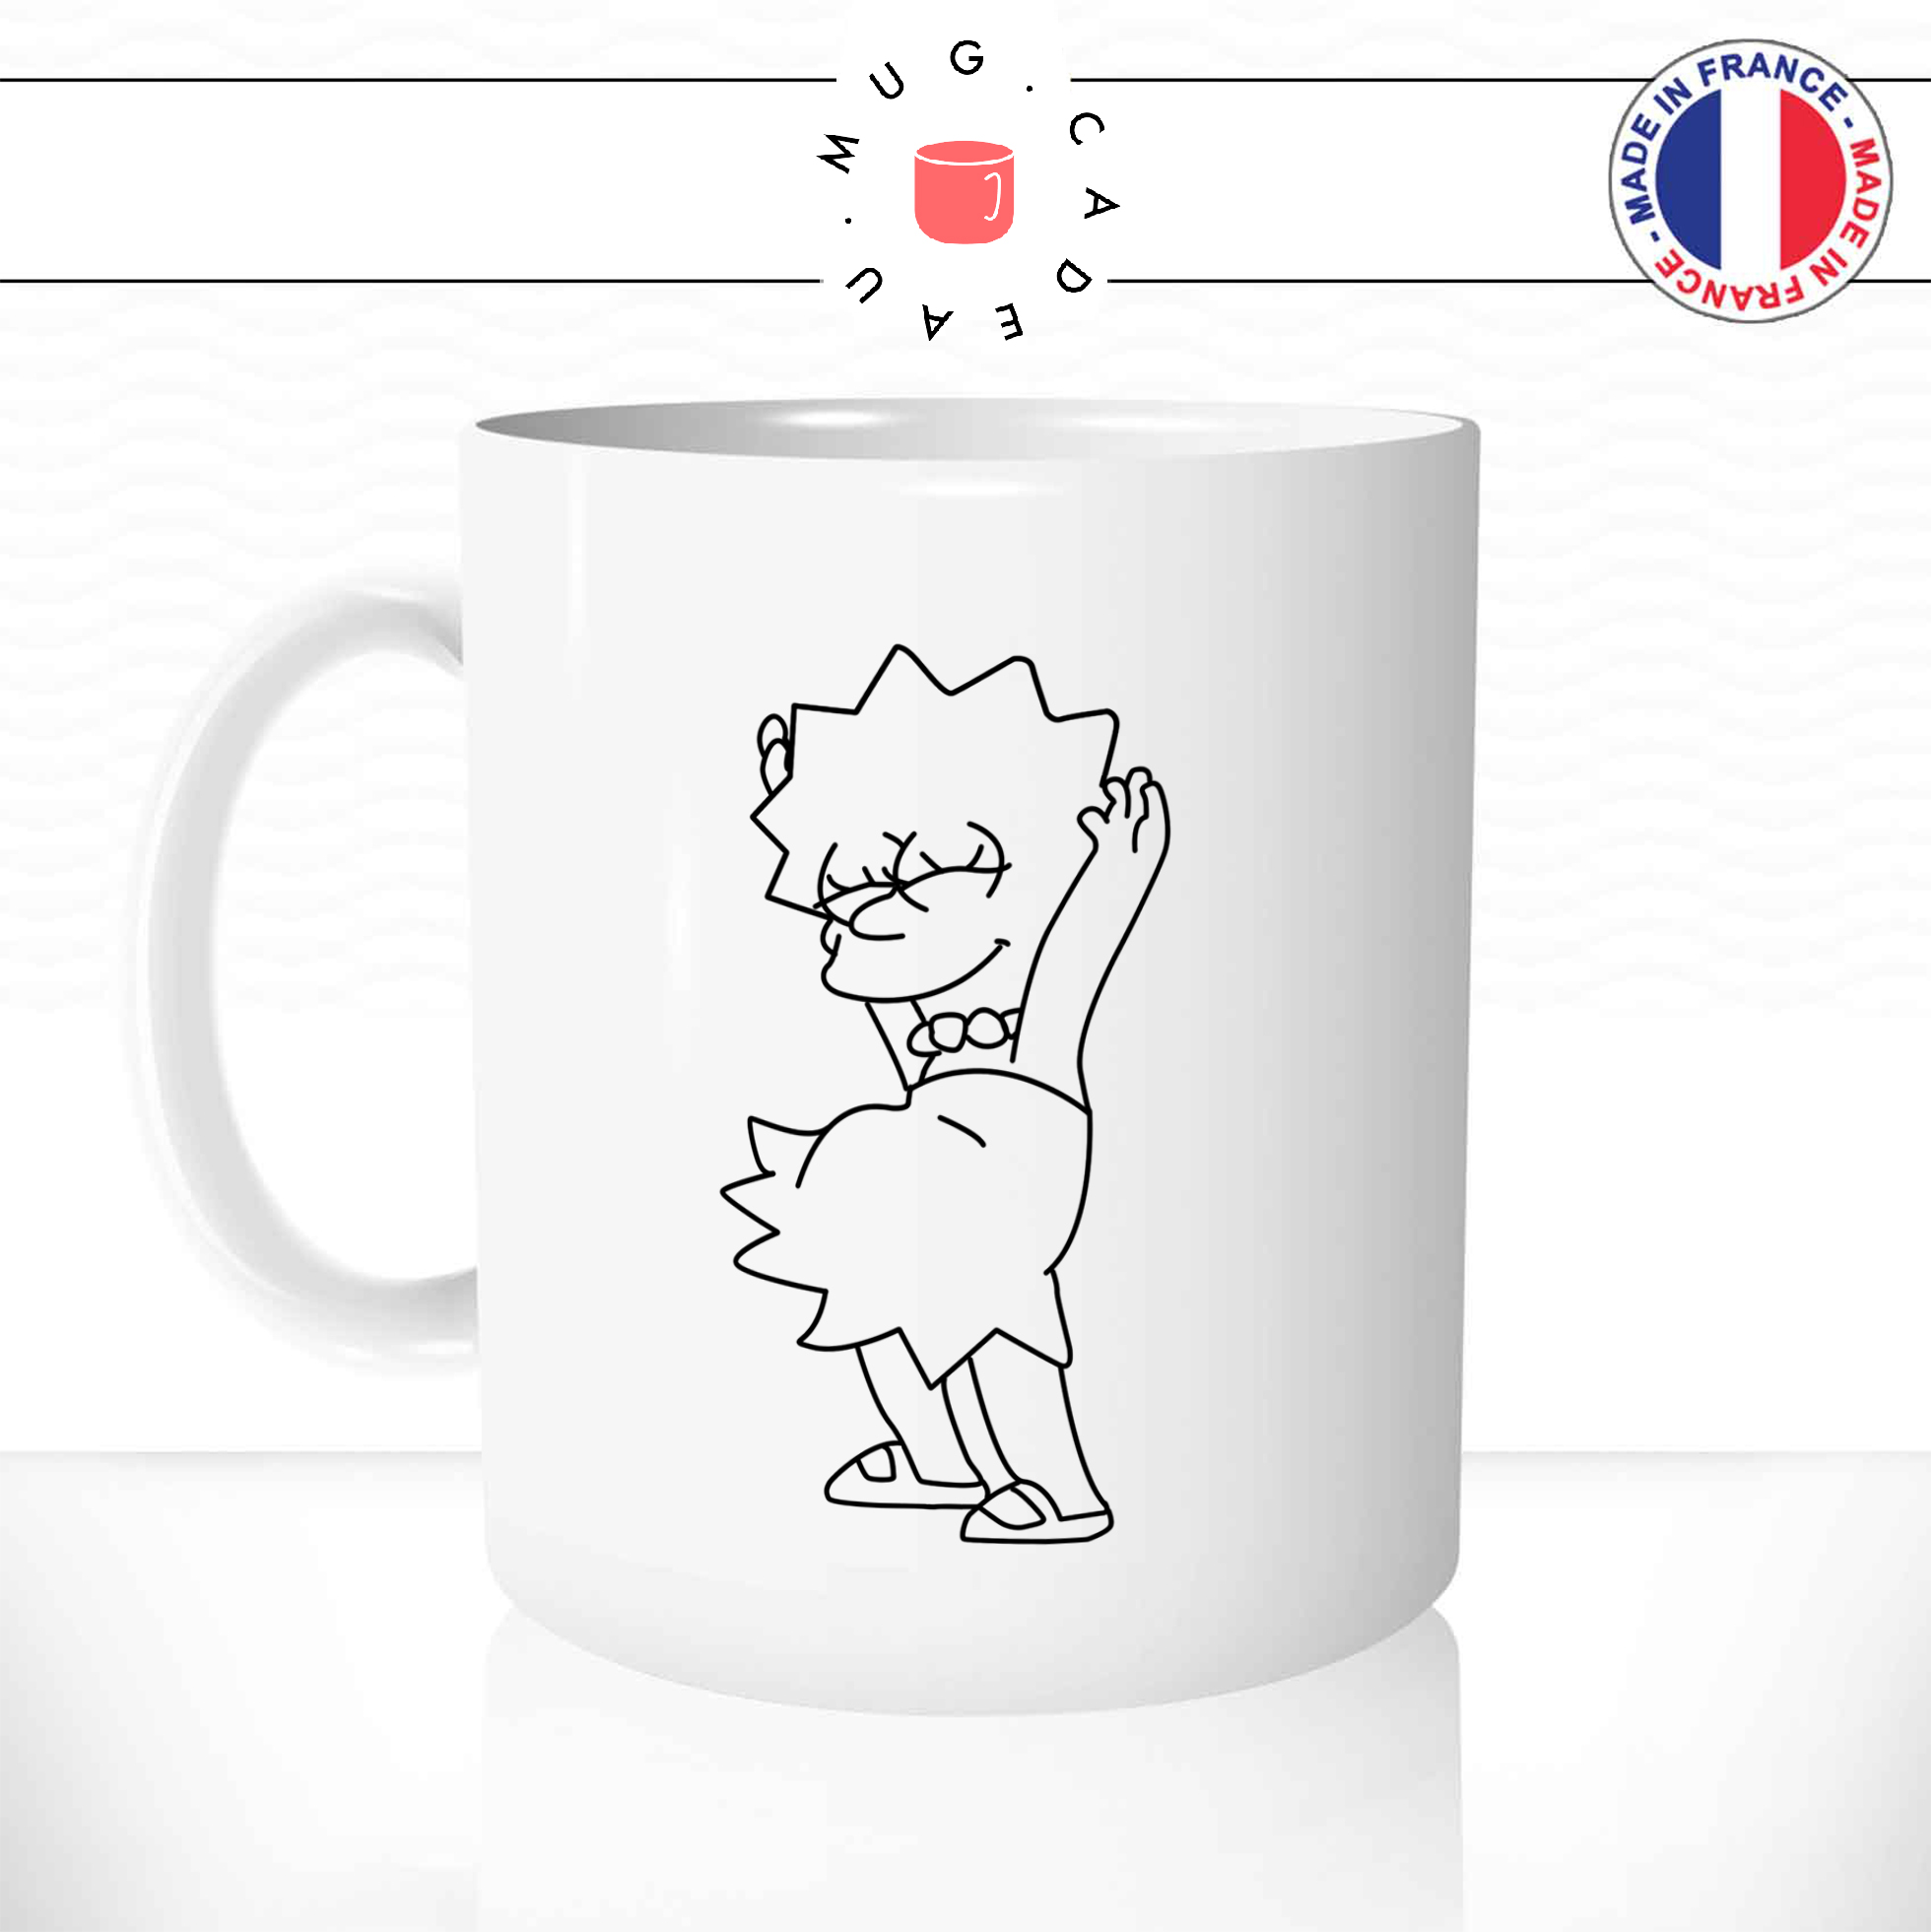 mug-tasse-ref2-simpsons-lisa-dessin-noir-simple-happy-cafe-the-mugs-tasses-personnalise-anse-gauche